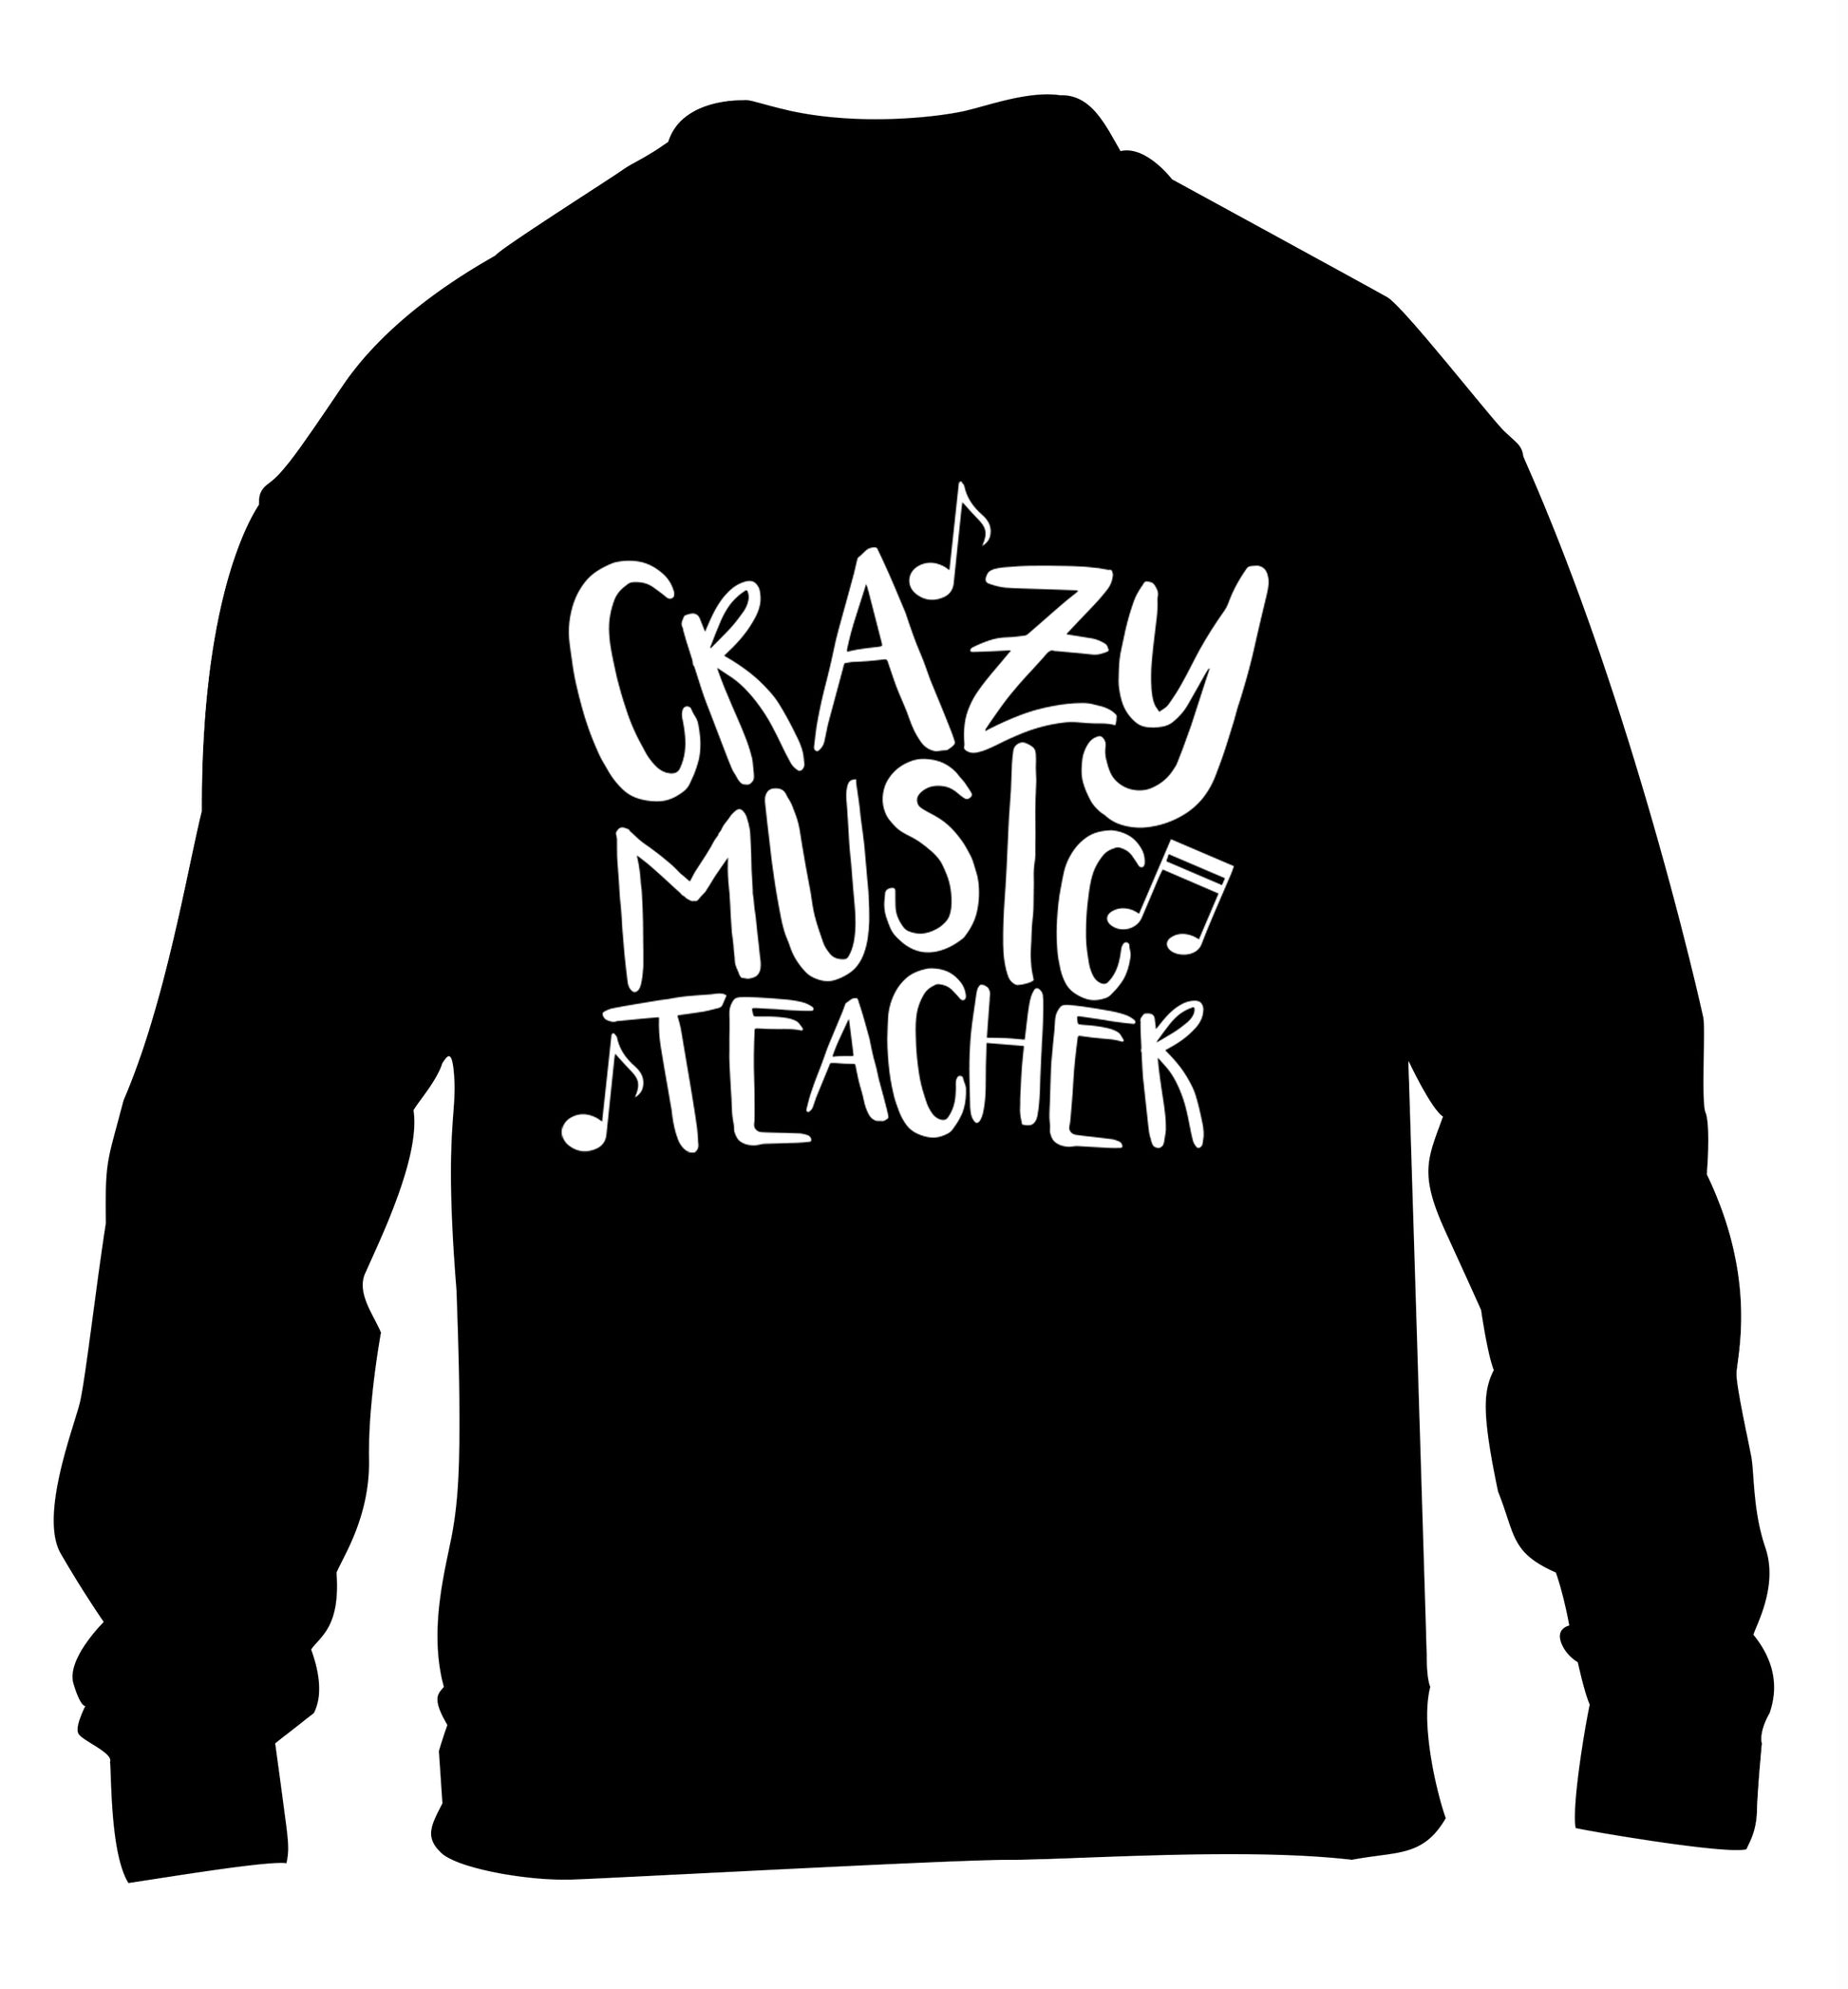 Crazy music teacher children's black sweater 12-13 Years